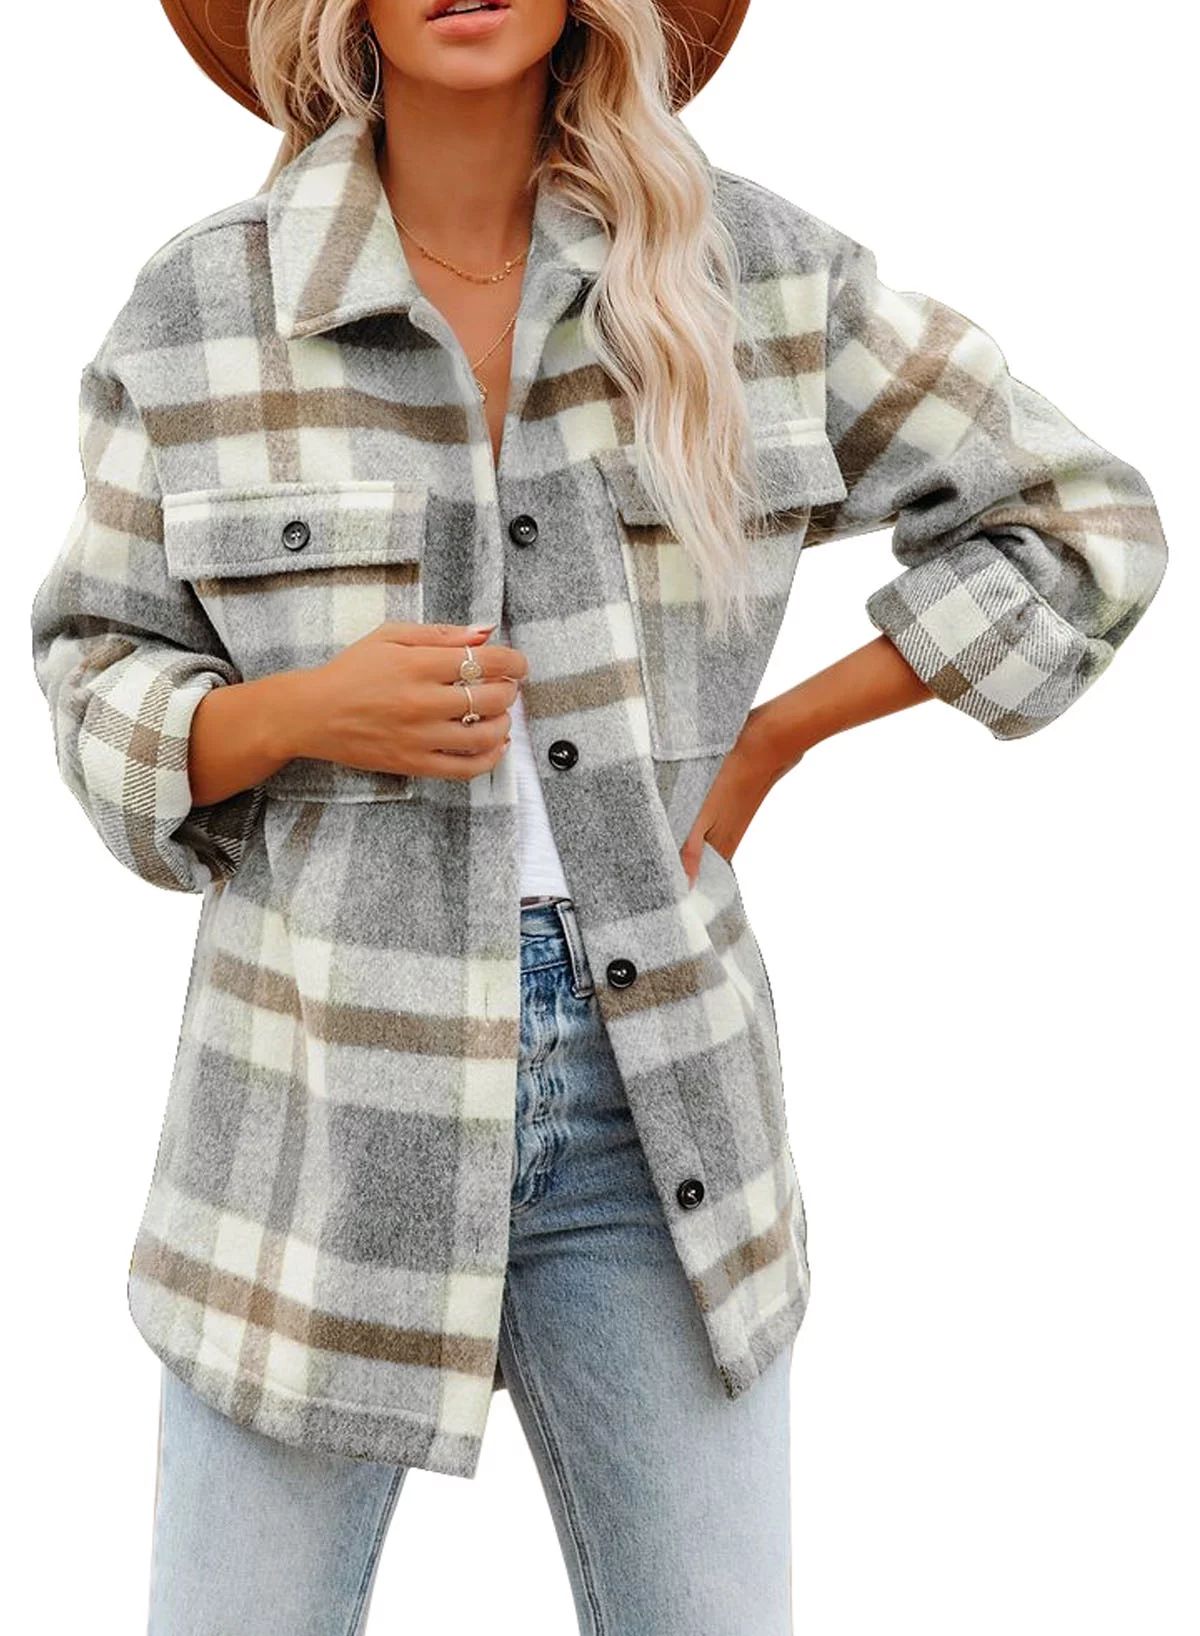 SHEWIN Women's Shacket Plaid Jacket Button Down Coats Long Sleeve Shirts Blouses Outwear Tops wit... | Walmart (US)